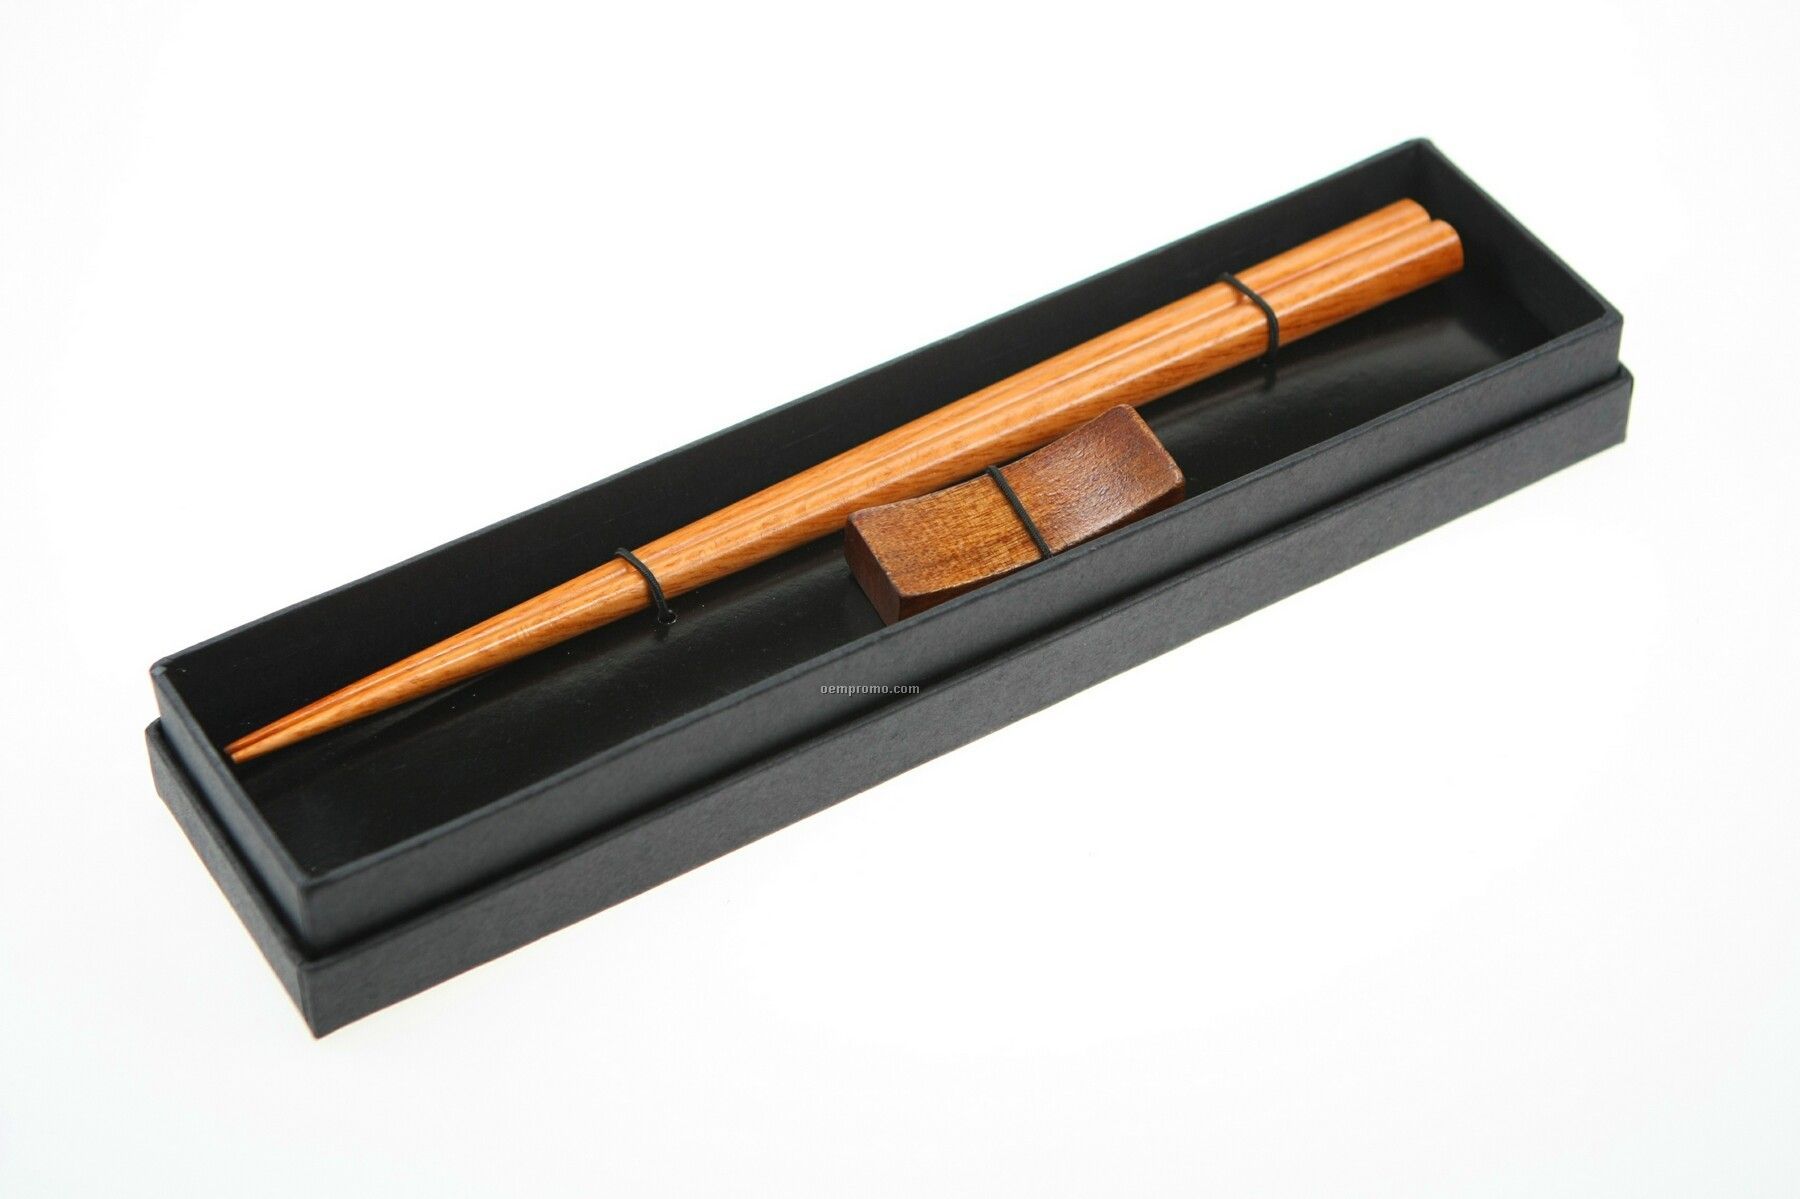 Wooden Brown Chopsticks And Rest Set In Black Cardboard Box